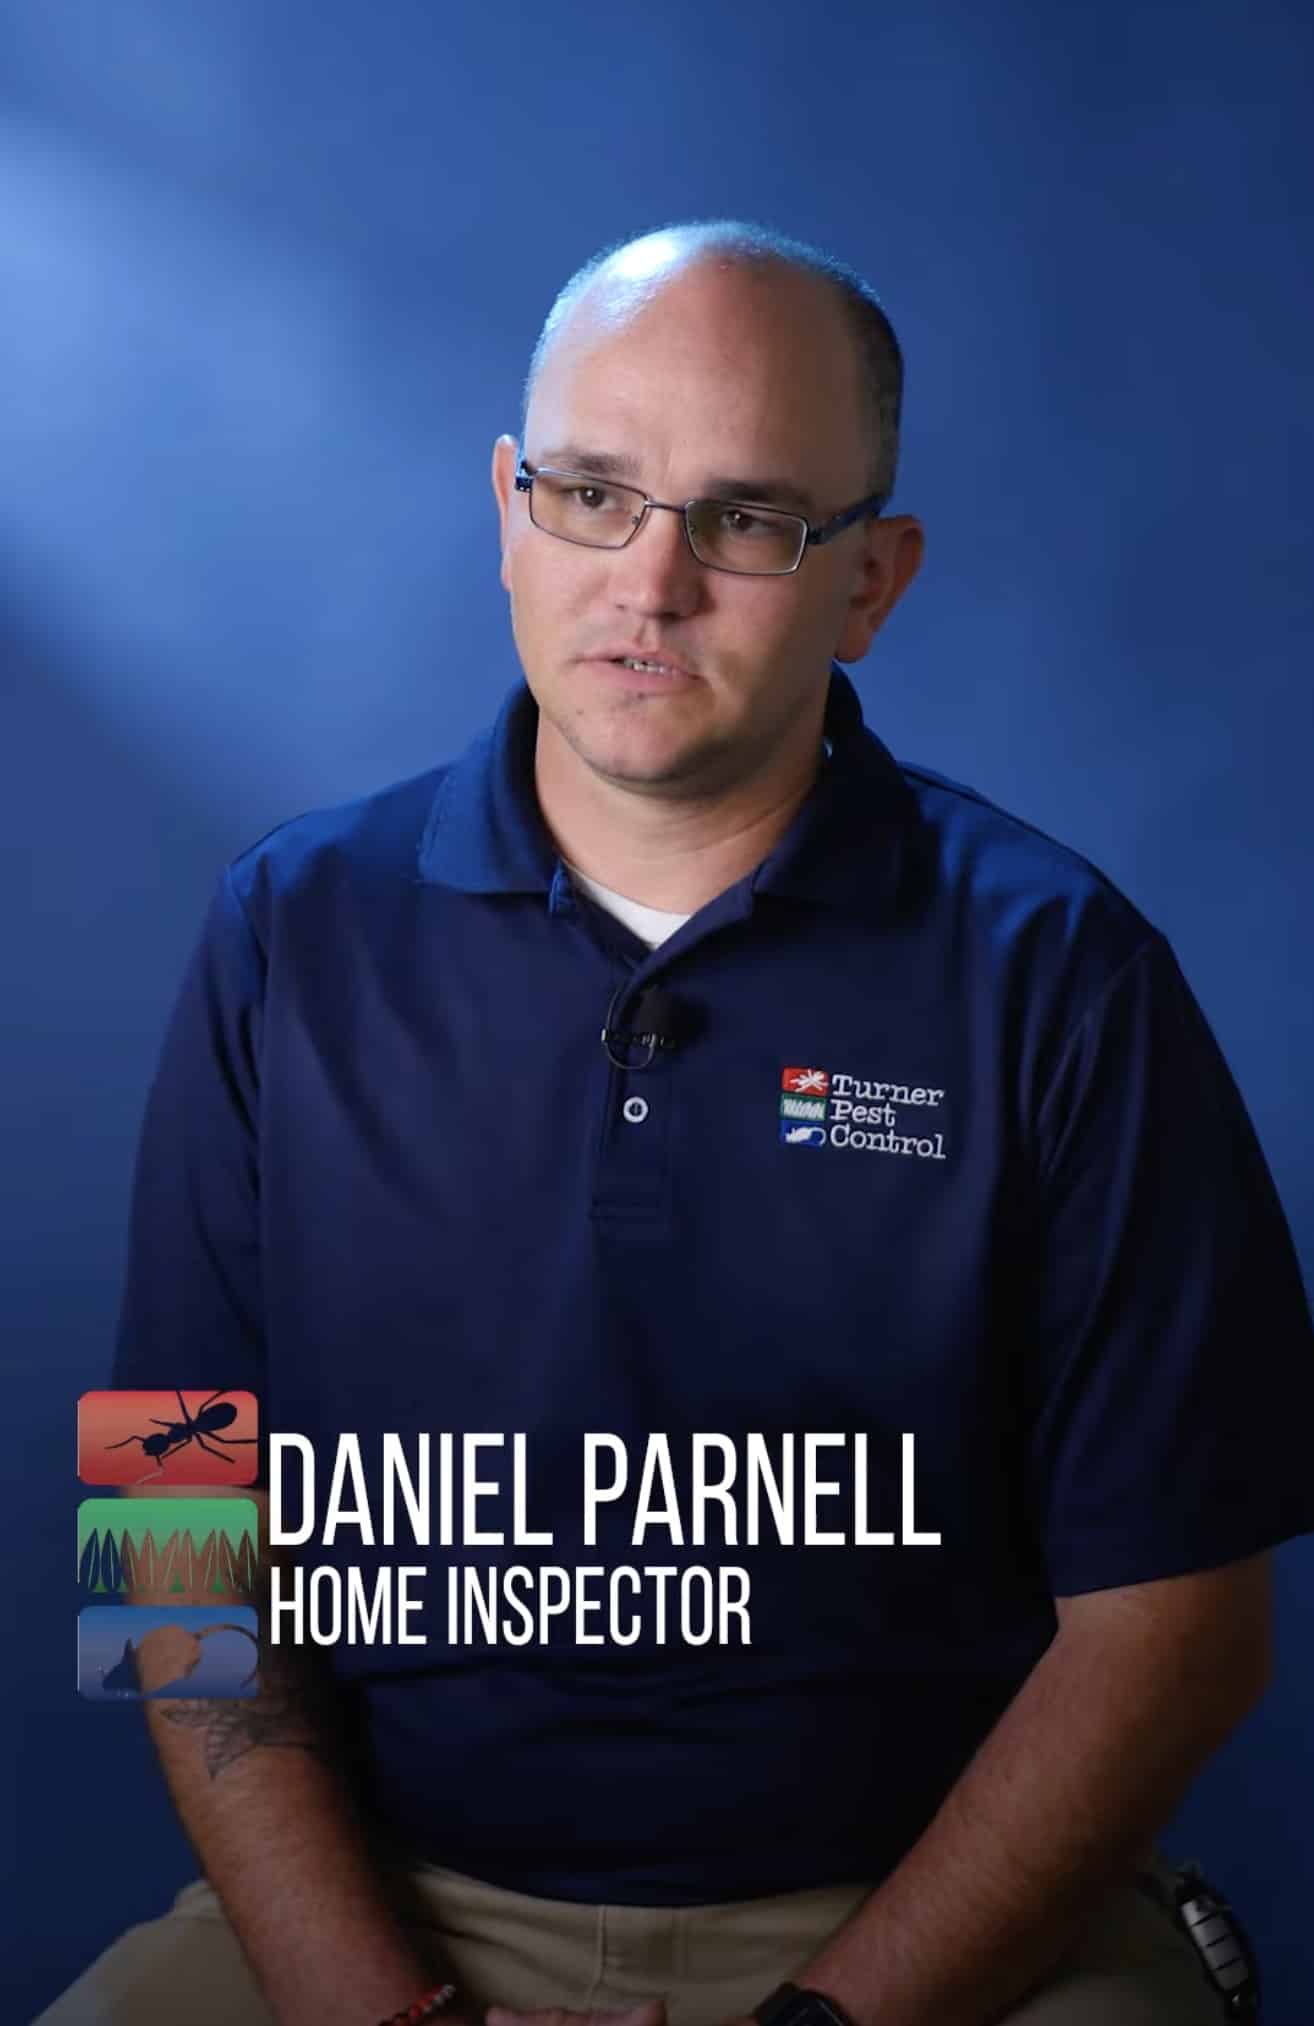 Daniel Parnell home inspector